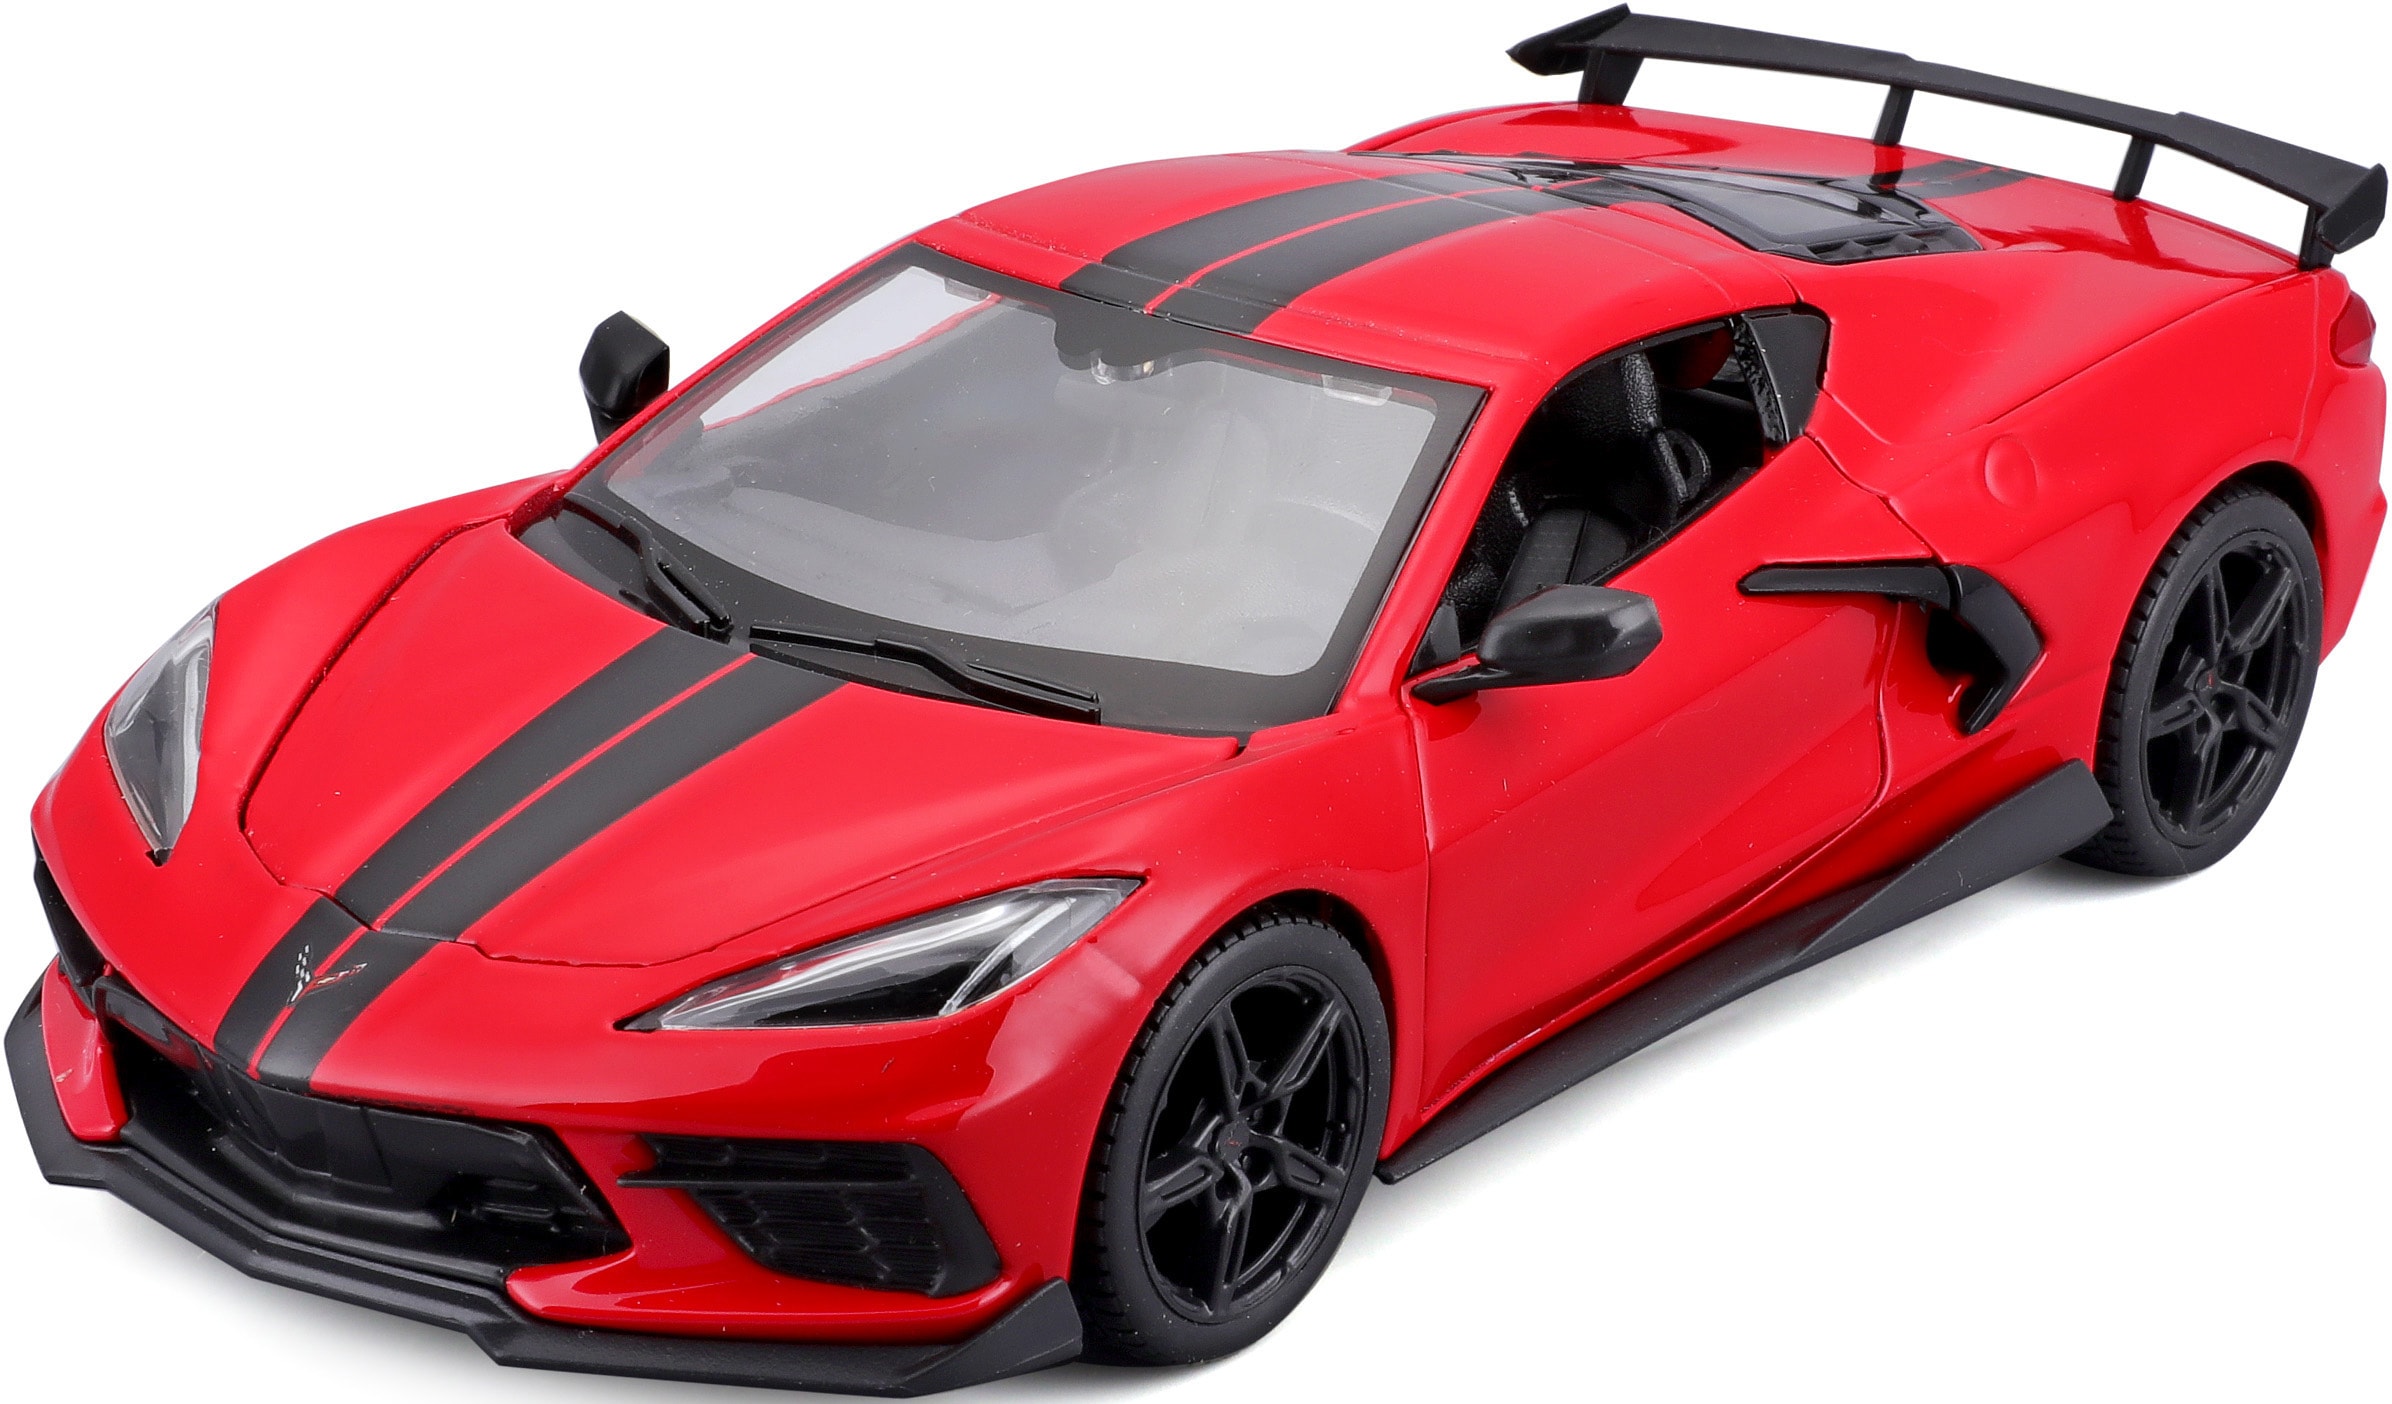 Maisto® Modellauto »Corvette Stingray Coupe 20, rot«, 1:24